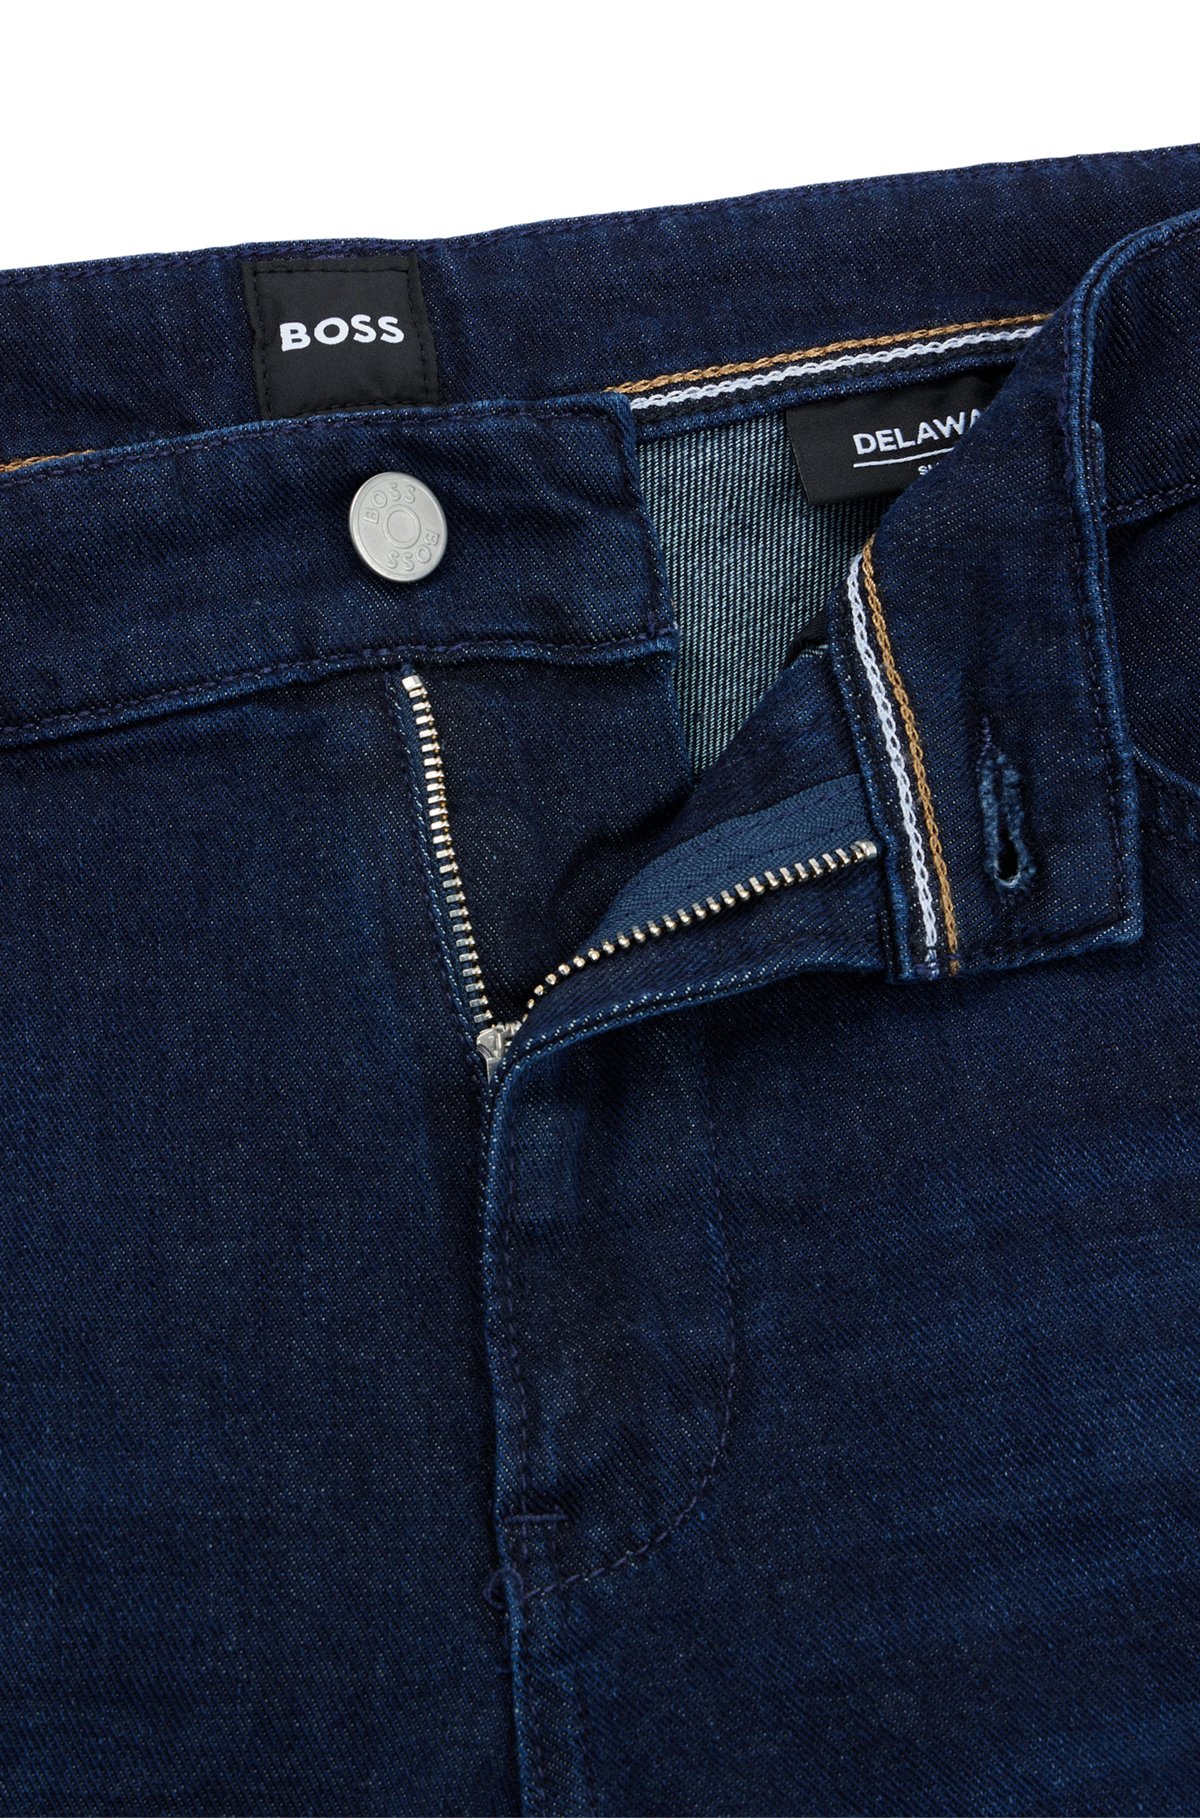 Regan Stoop Allergisk BOSS - Slim-fit jeans in blue Italian super-soft denim